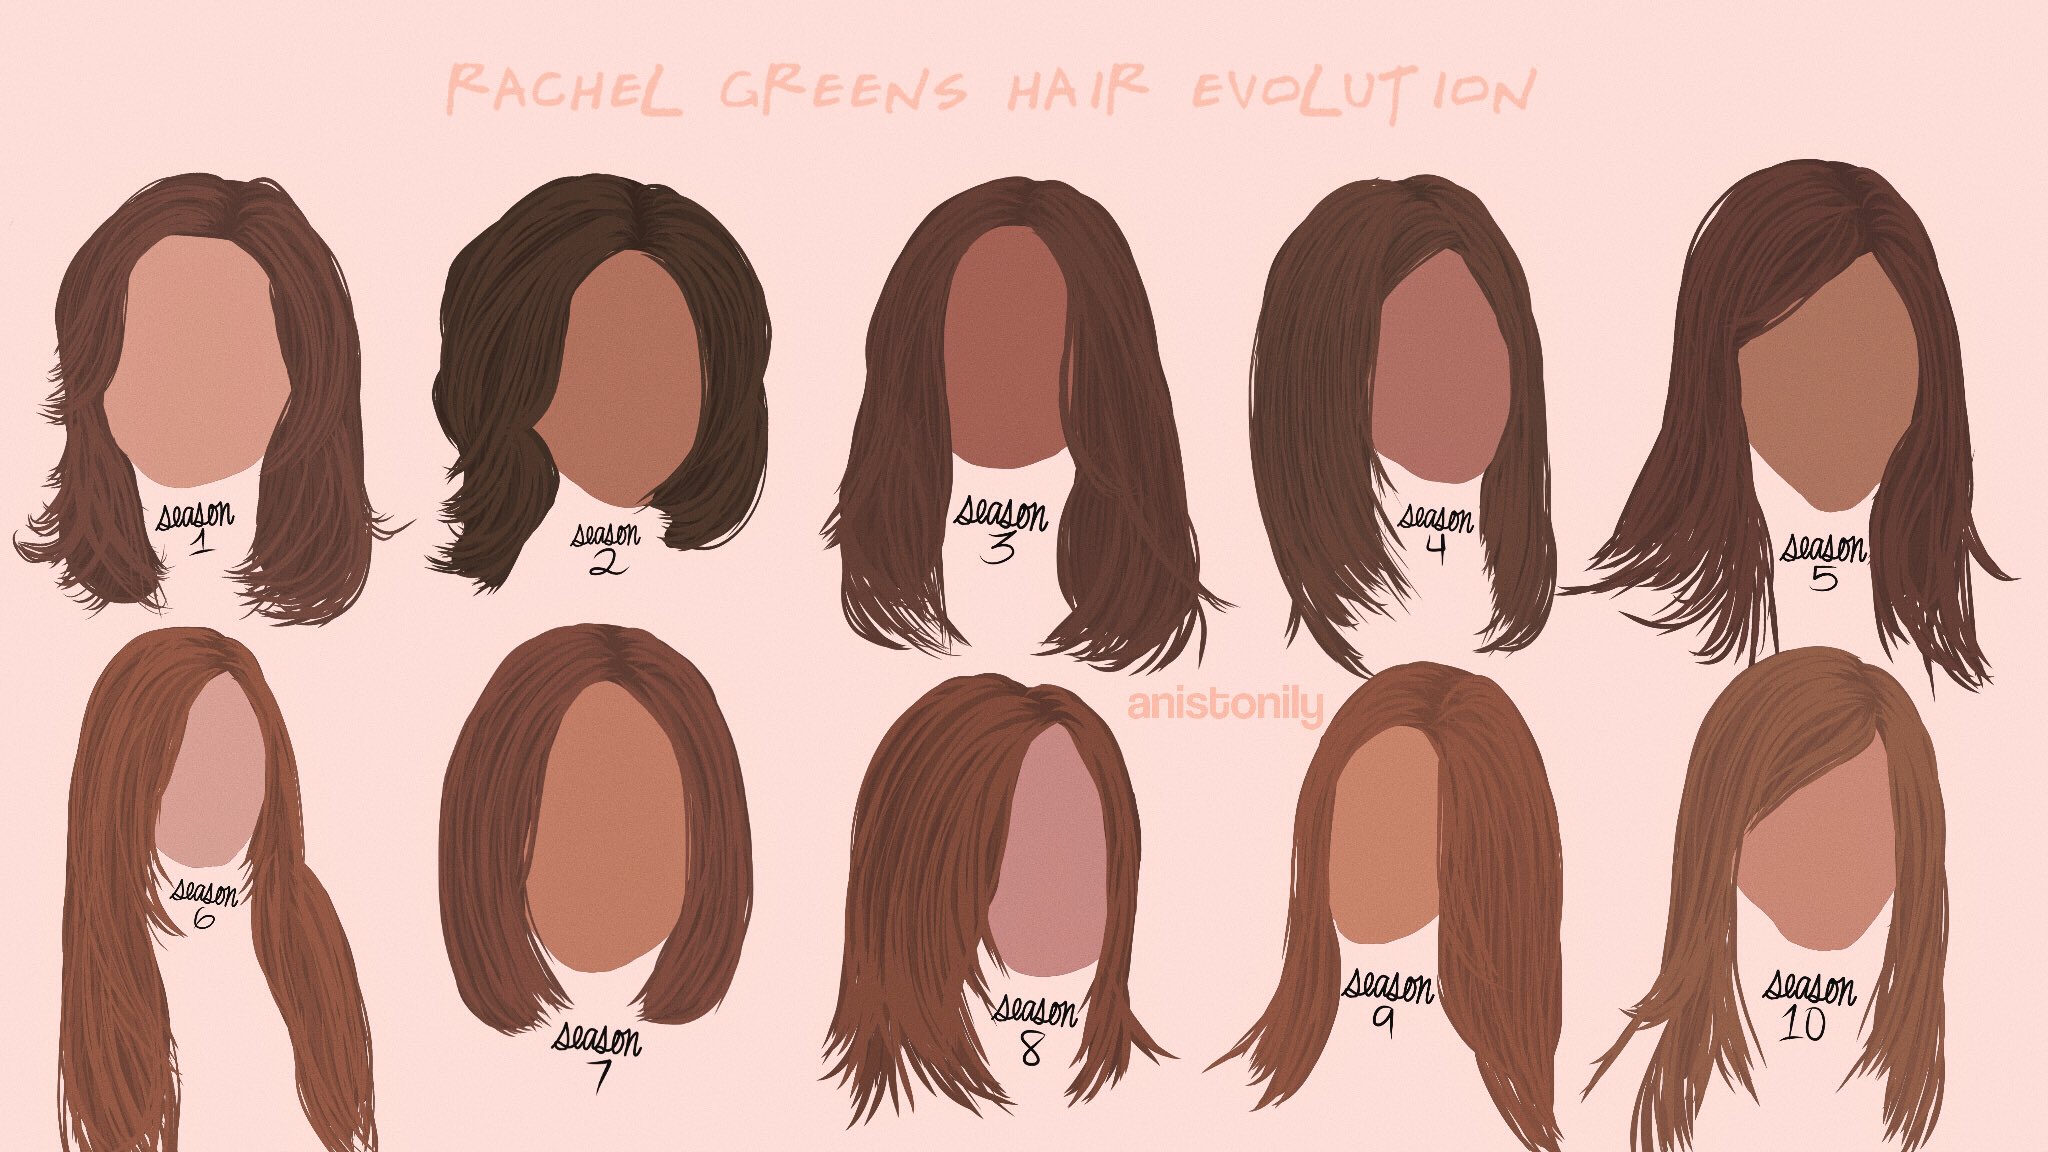 Rachel Green Hair: The Definitive Ranking by Season